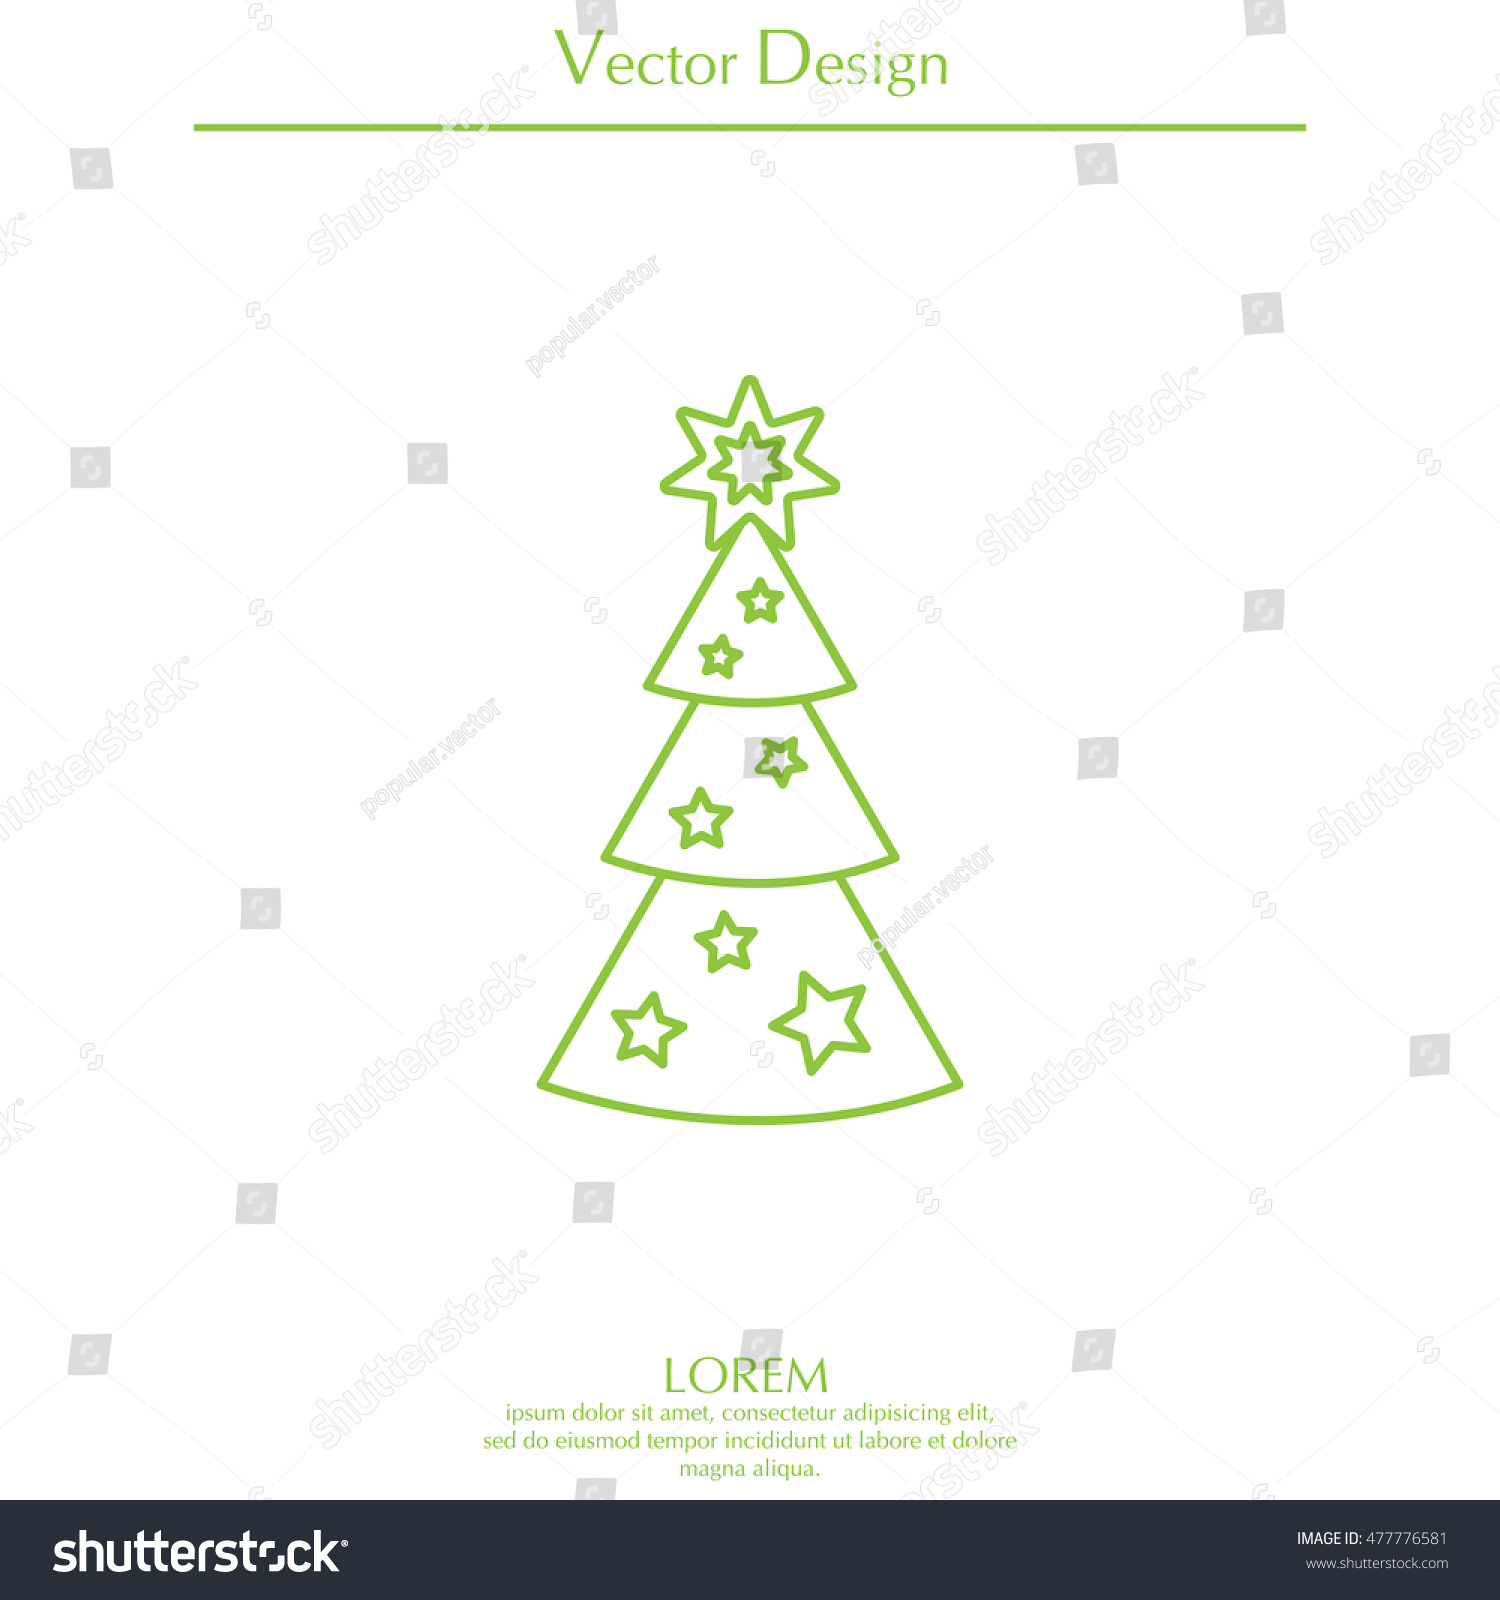 Edit Vectors Free Online - Fir tree | Shutterstock Editor